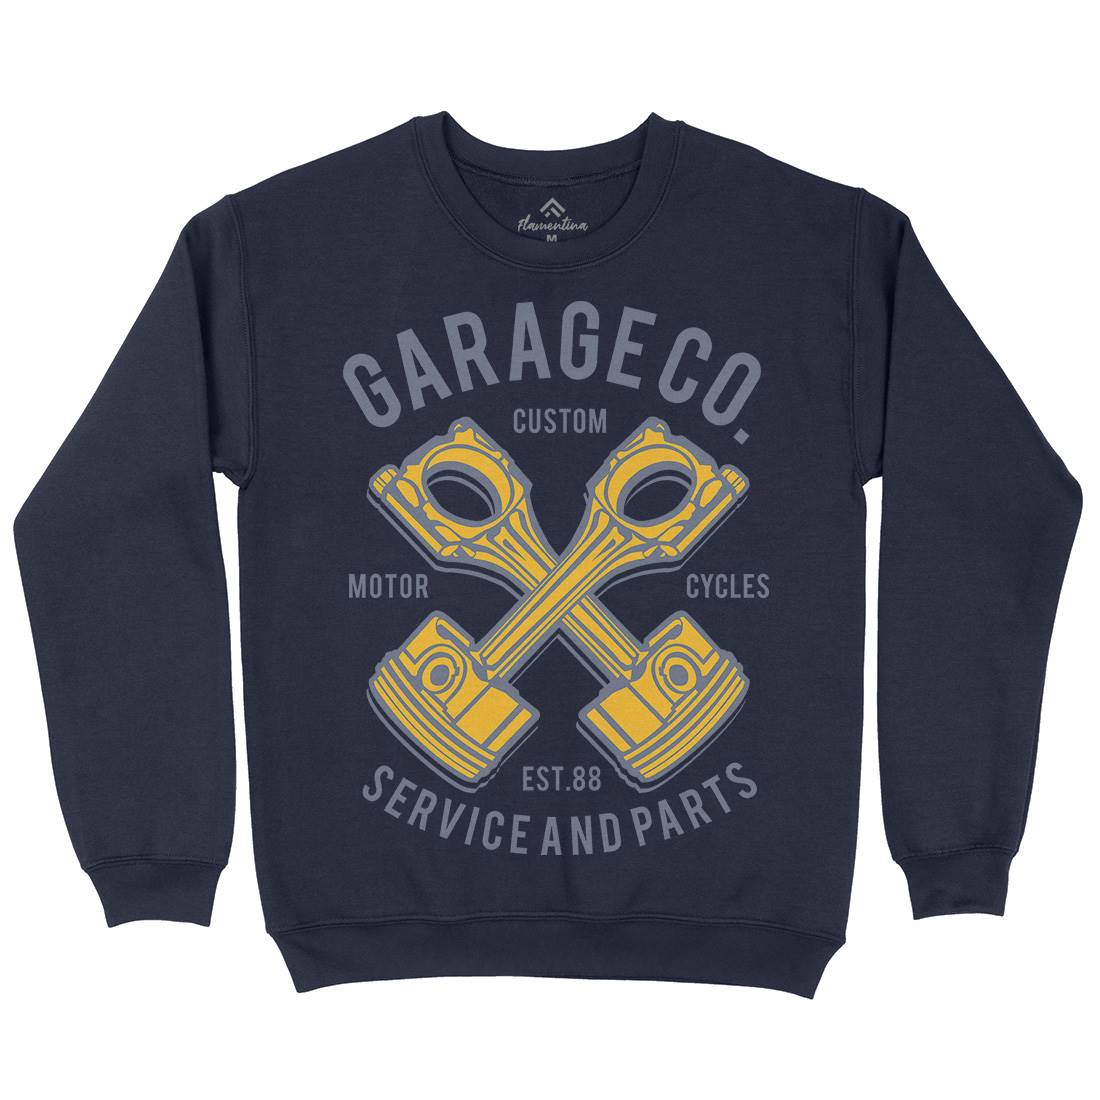 Garage Co Kids Crew Neck Sweatshirt Cars B216